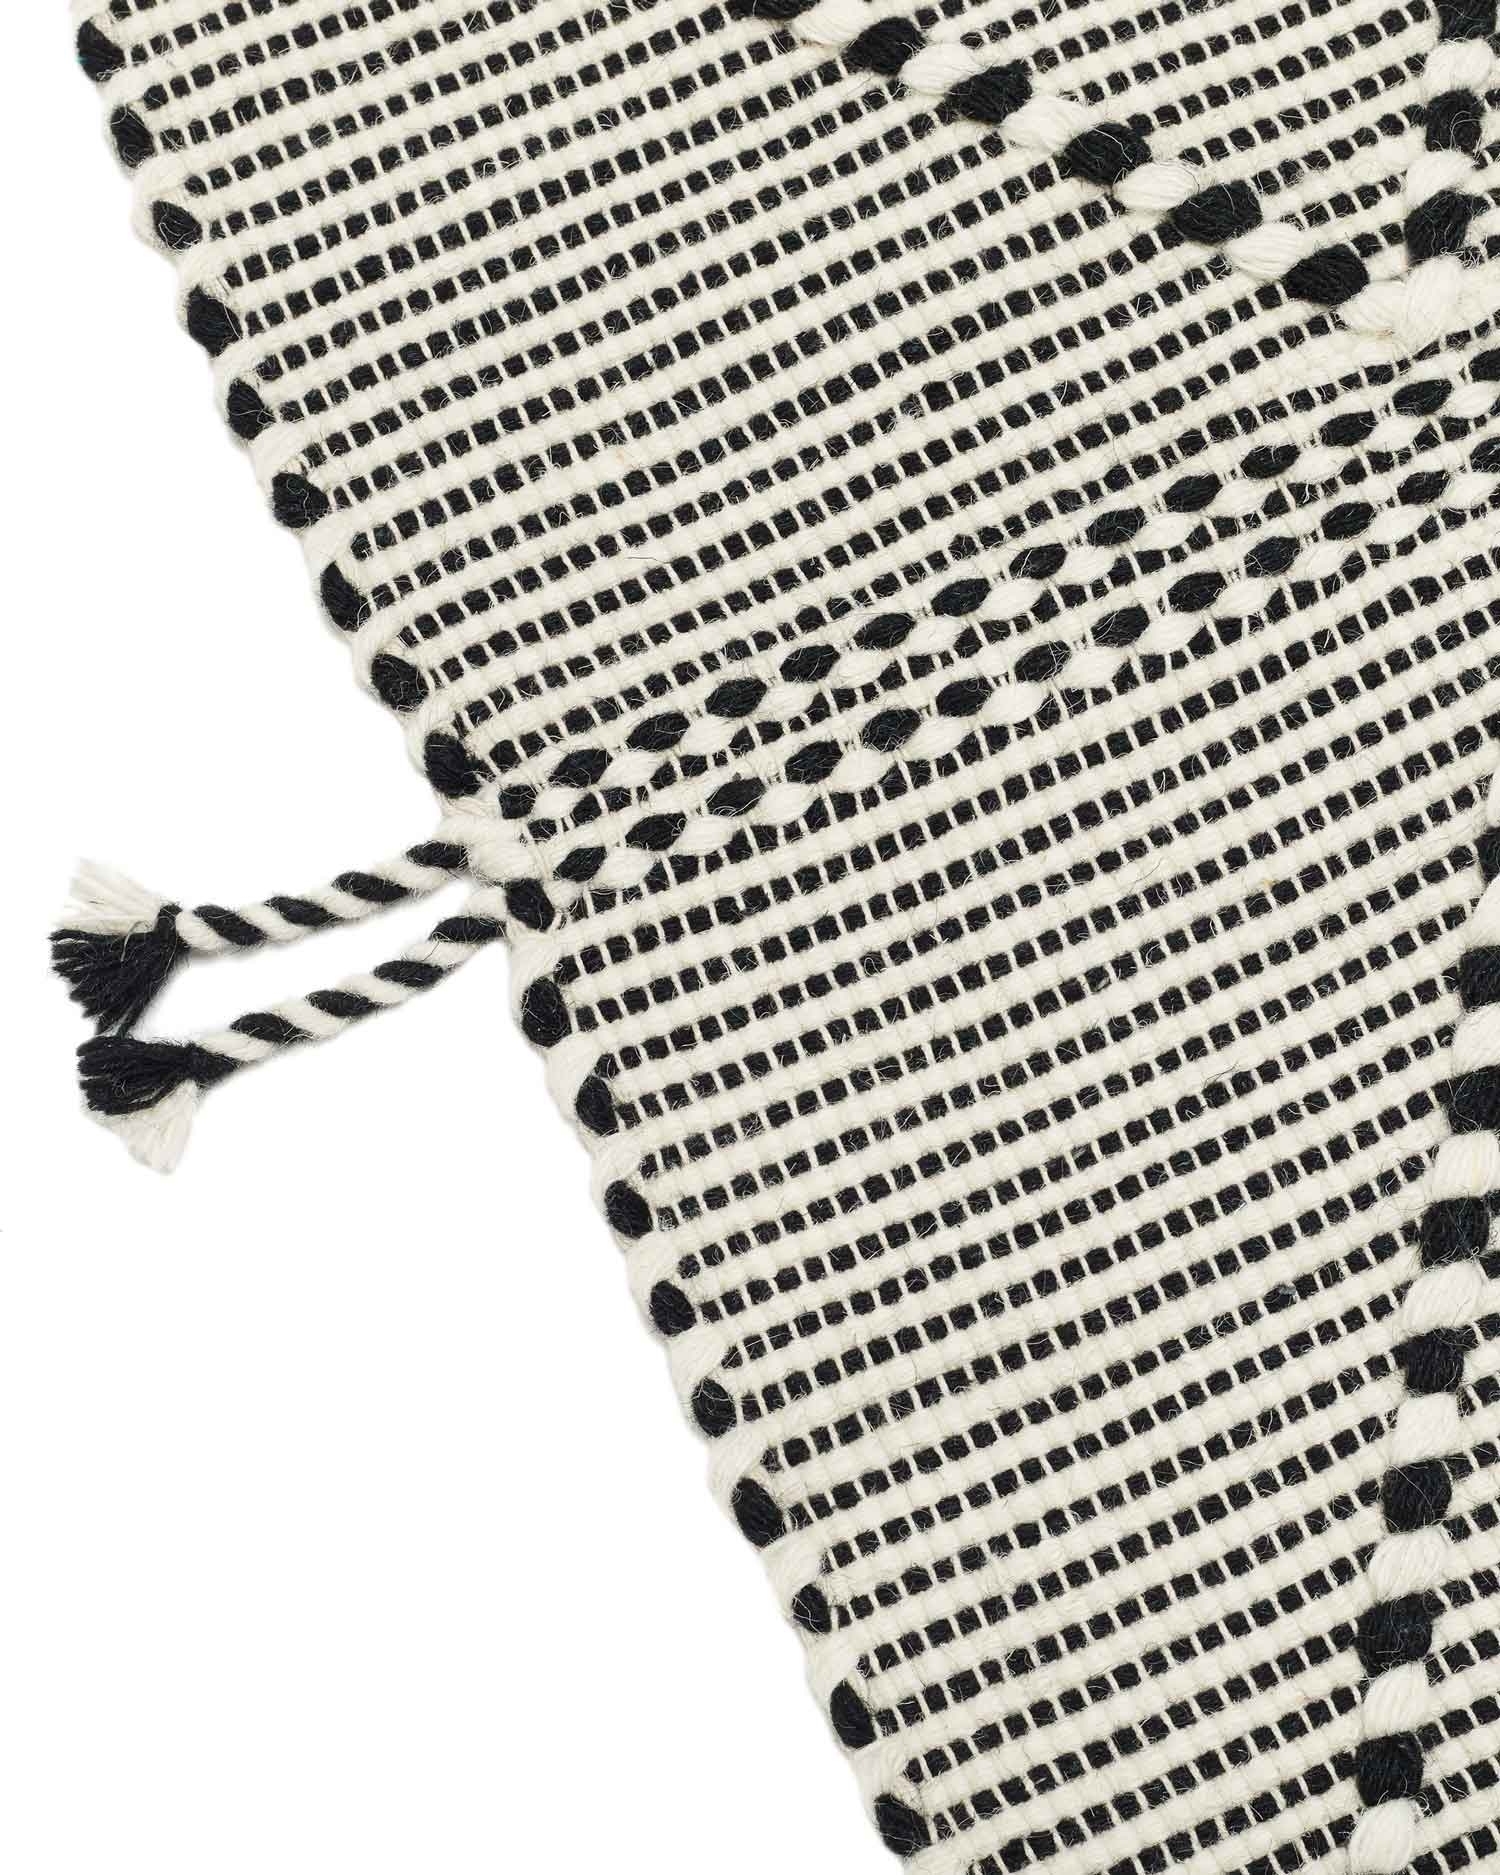 Taza Rug, Black and White 9x12 - Image 3